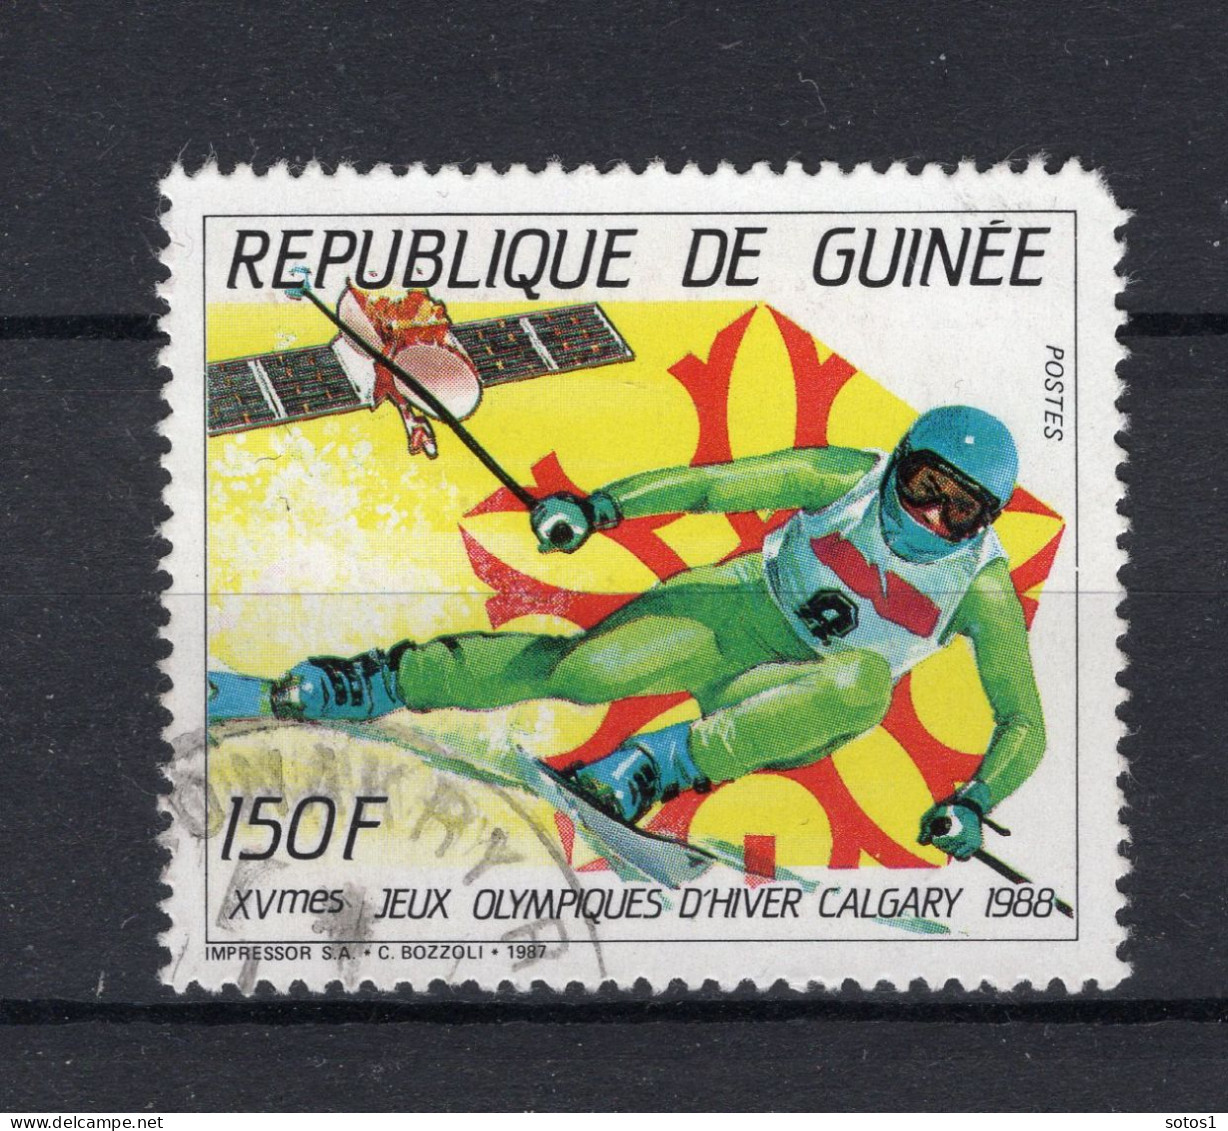 GUINEE REP. Yt. 824° Gestempeld 1987 - Guinée (1958-...)